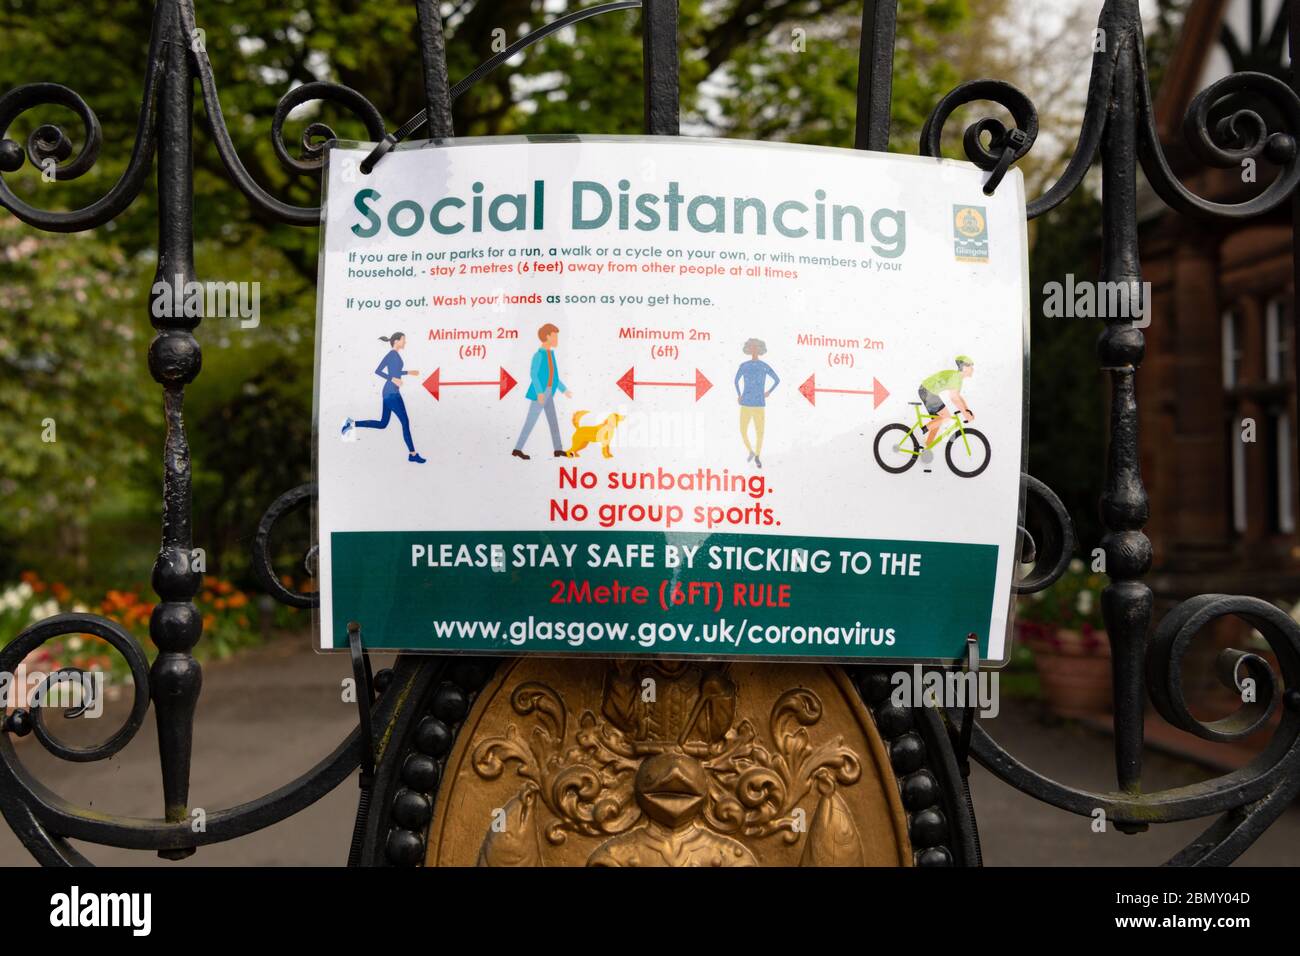 Social Distancing and 2m rule on gates of Glasgow Botanic Gardens, Scotland, UK during coronavirus pandemic 2020 Stock Photo